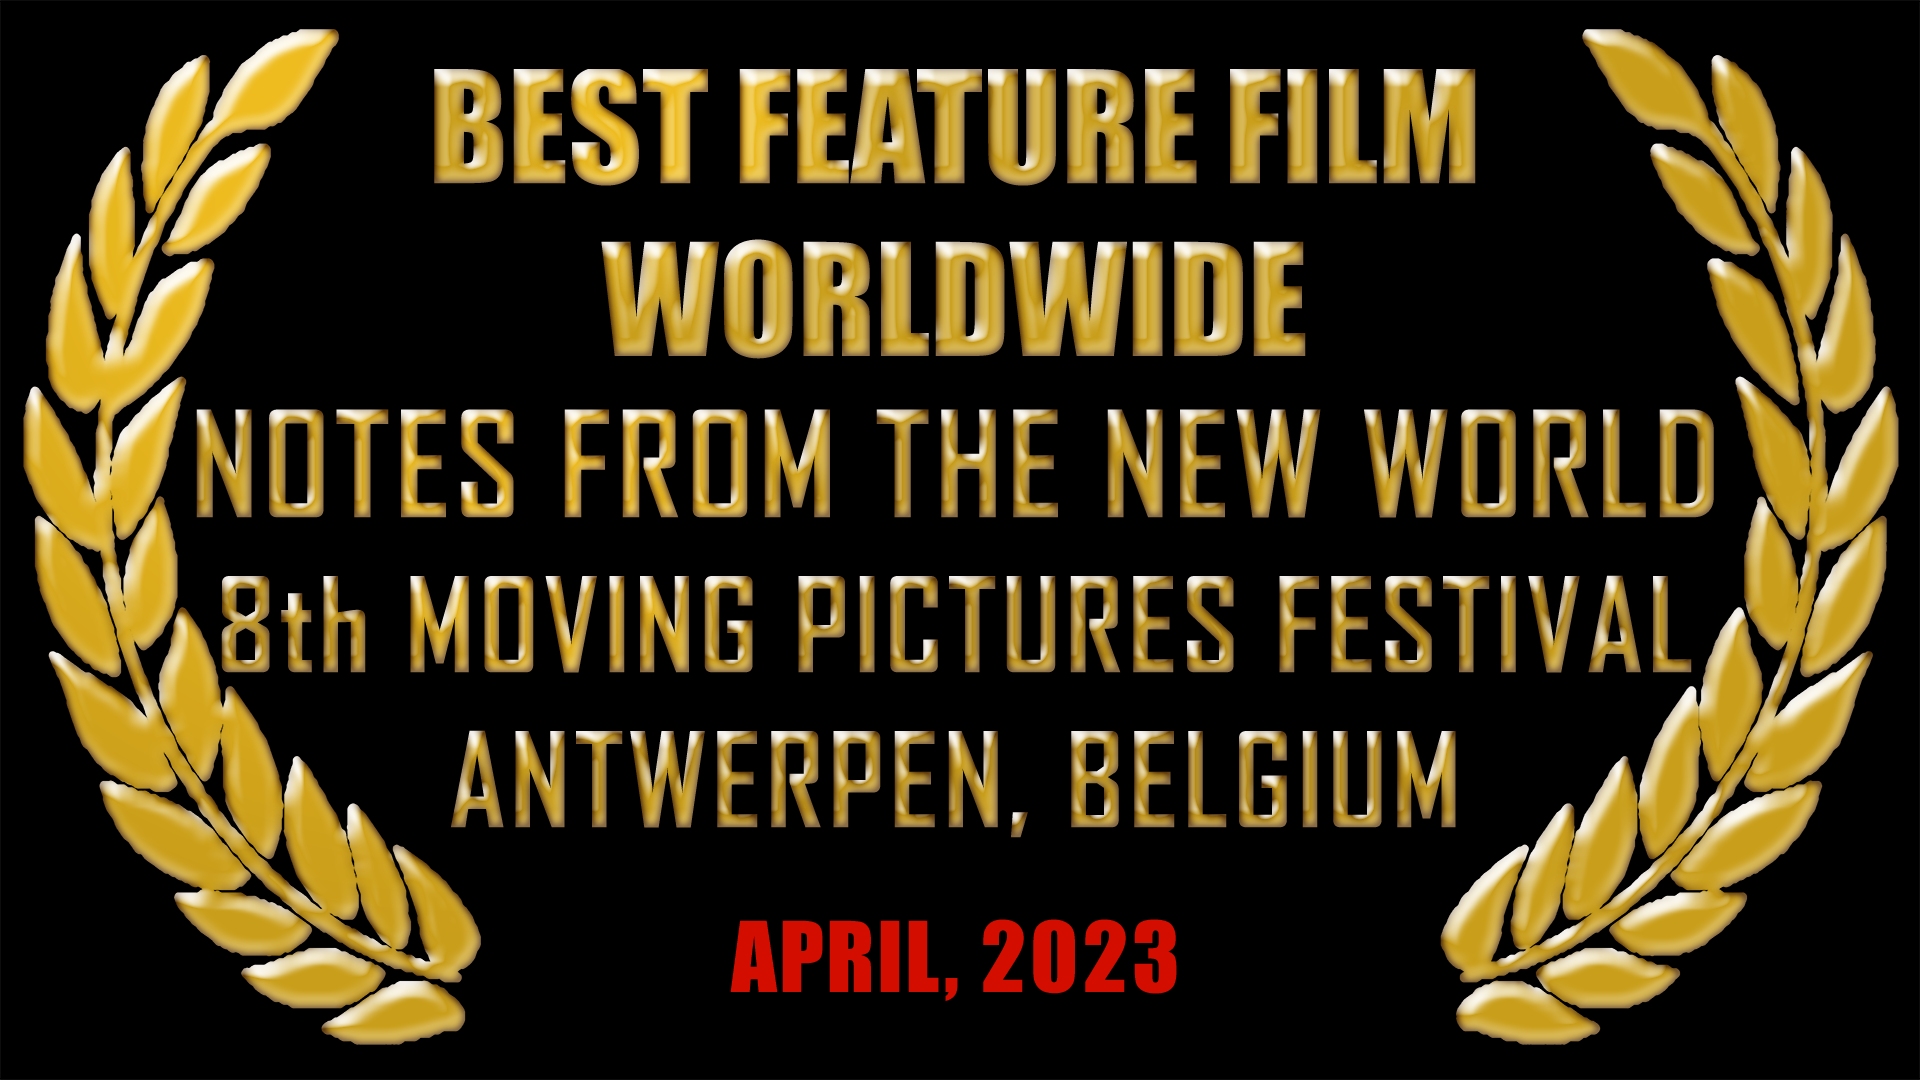 Best Feature Film Worldwide, April 2023